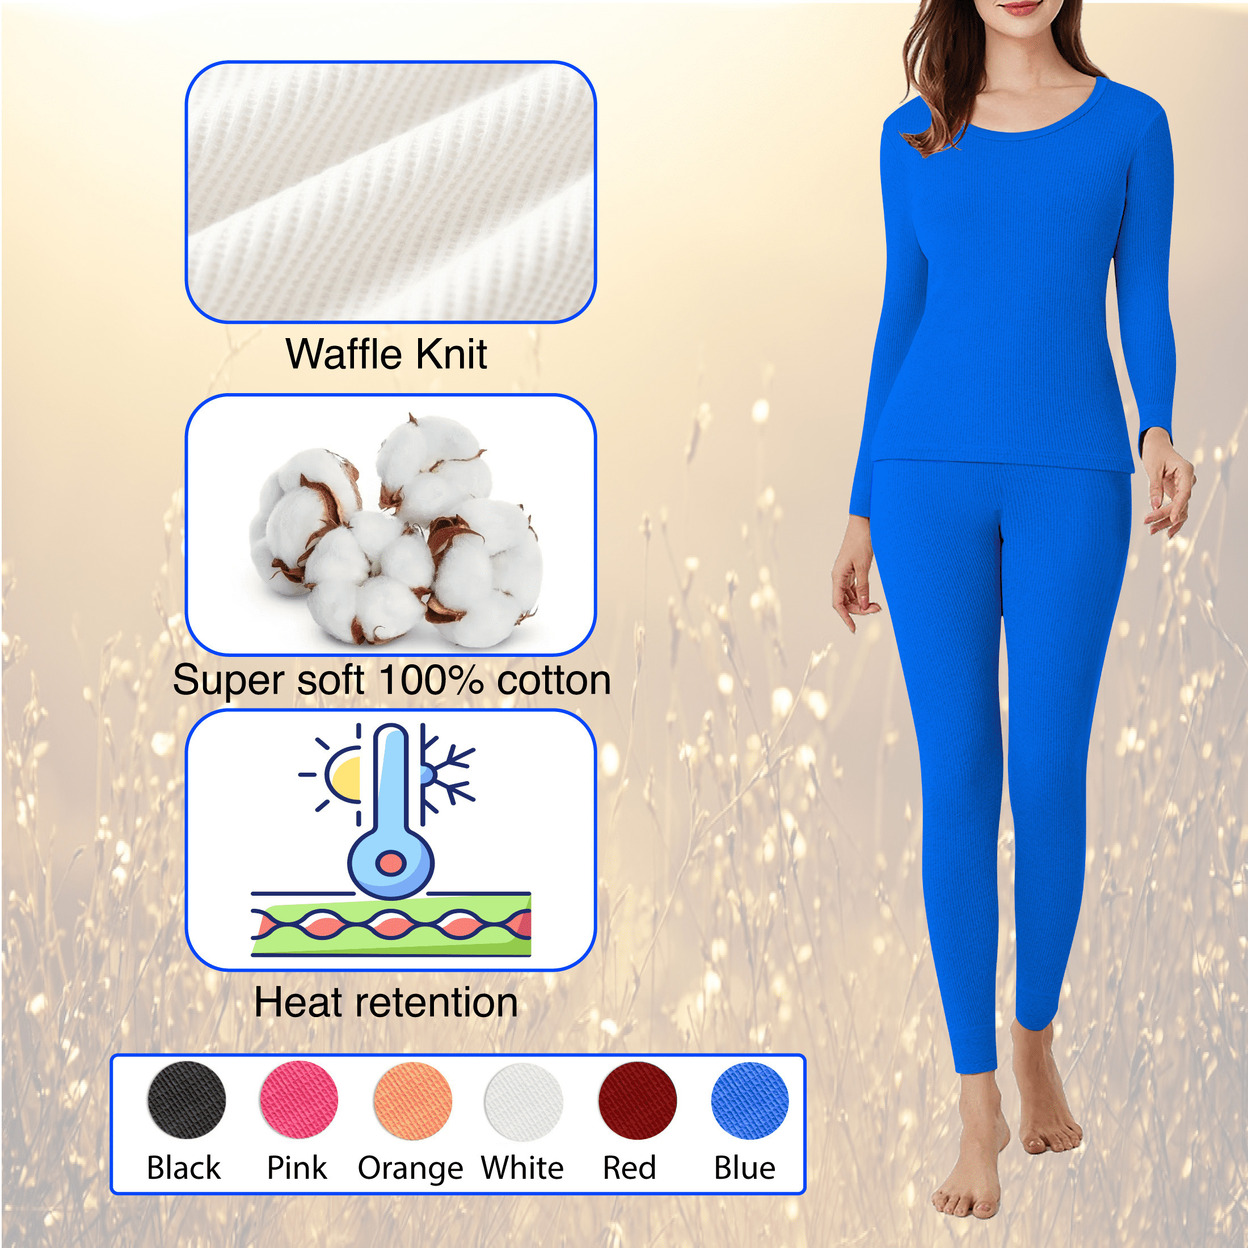 2-Piece: Women's Ultra Soft Cotton Waffle Knit Thermal Sets - Blue, X-large